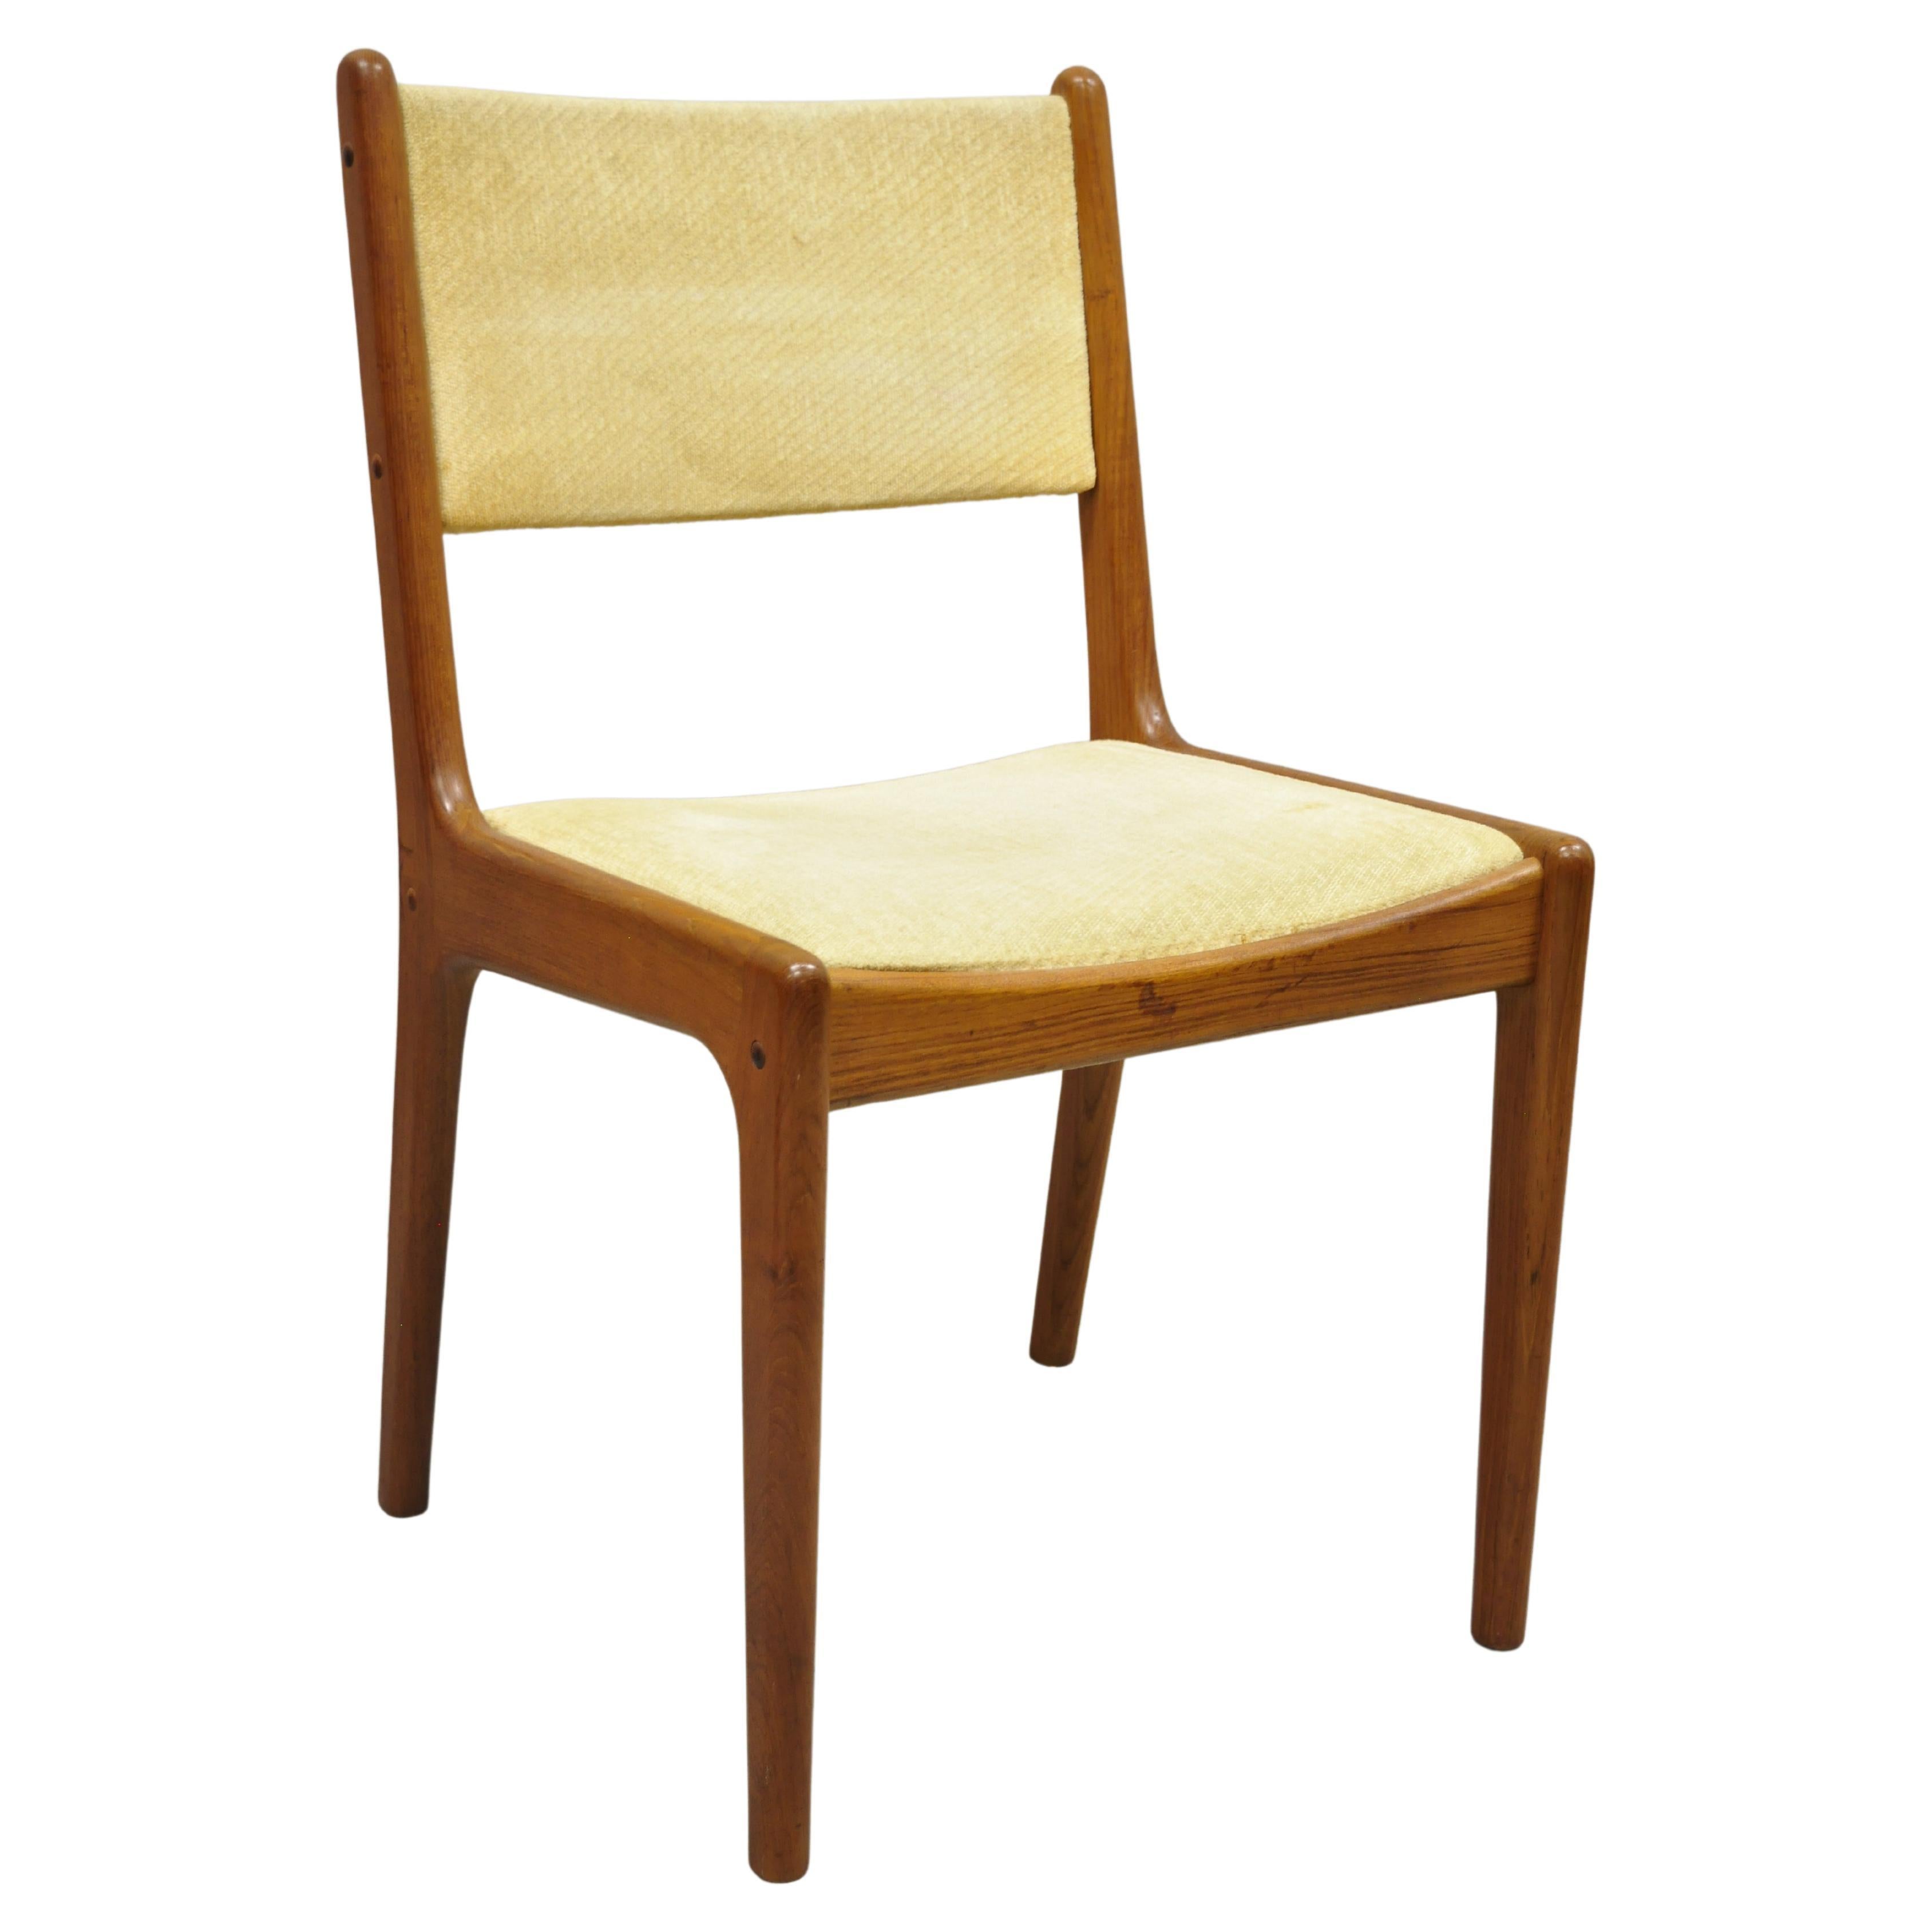 Vintage Mid-Century Modern Danish Style Teak Wood Dining Chair by Sun Furniture